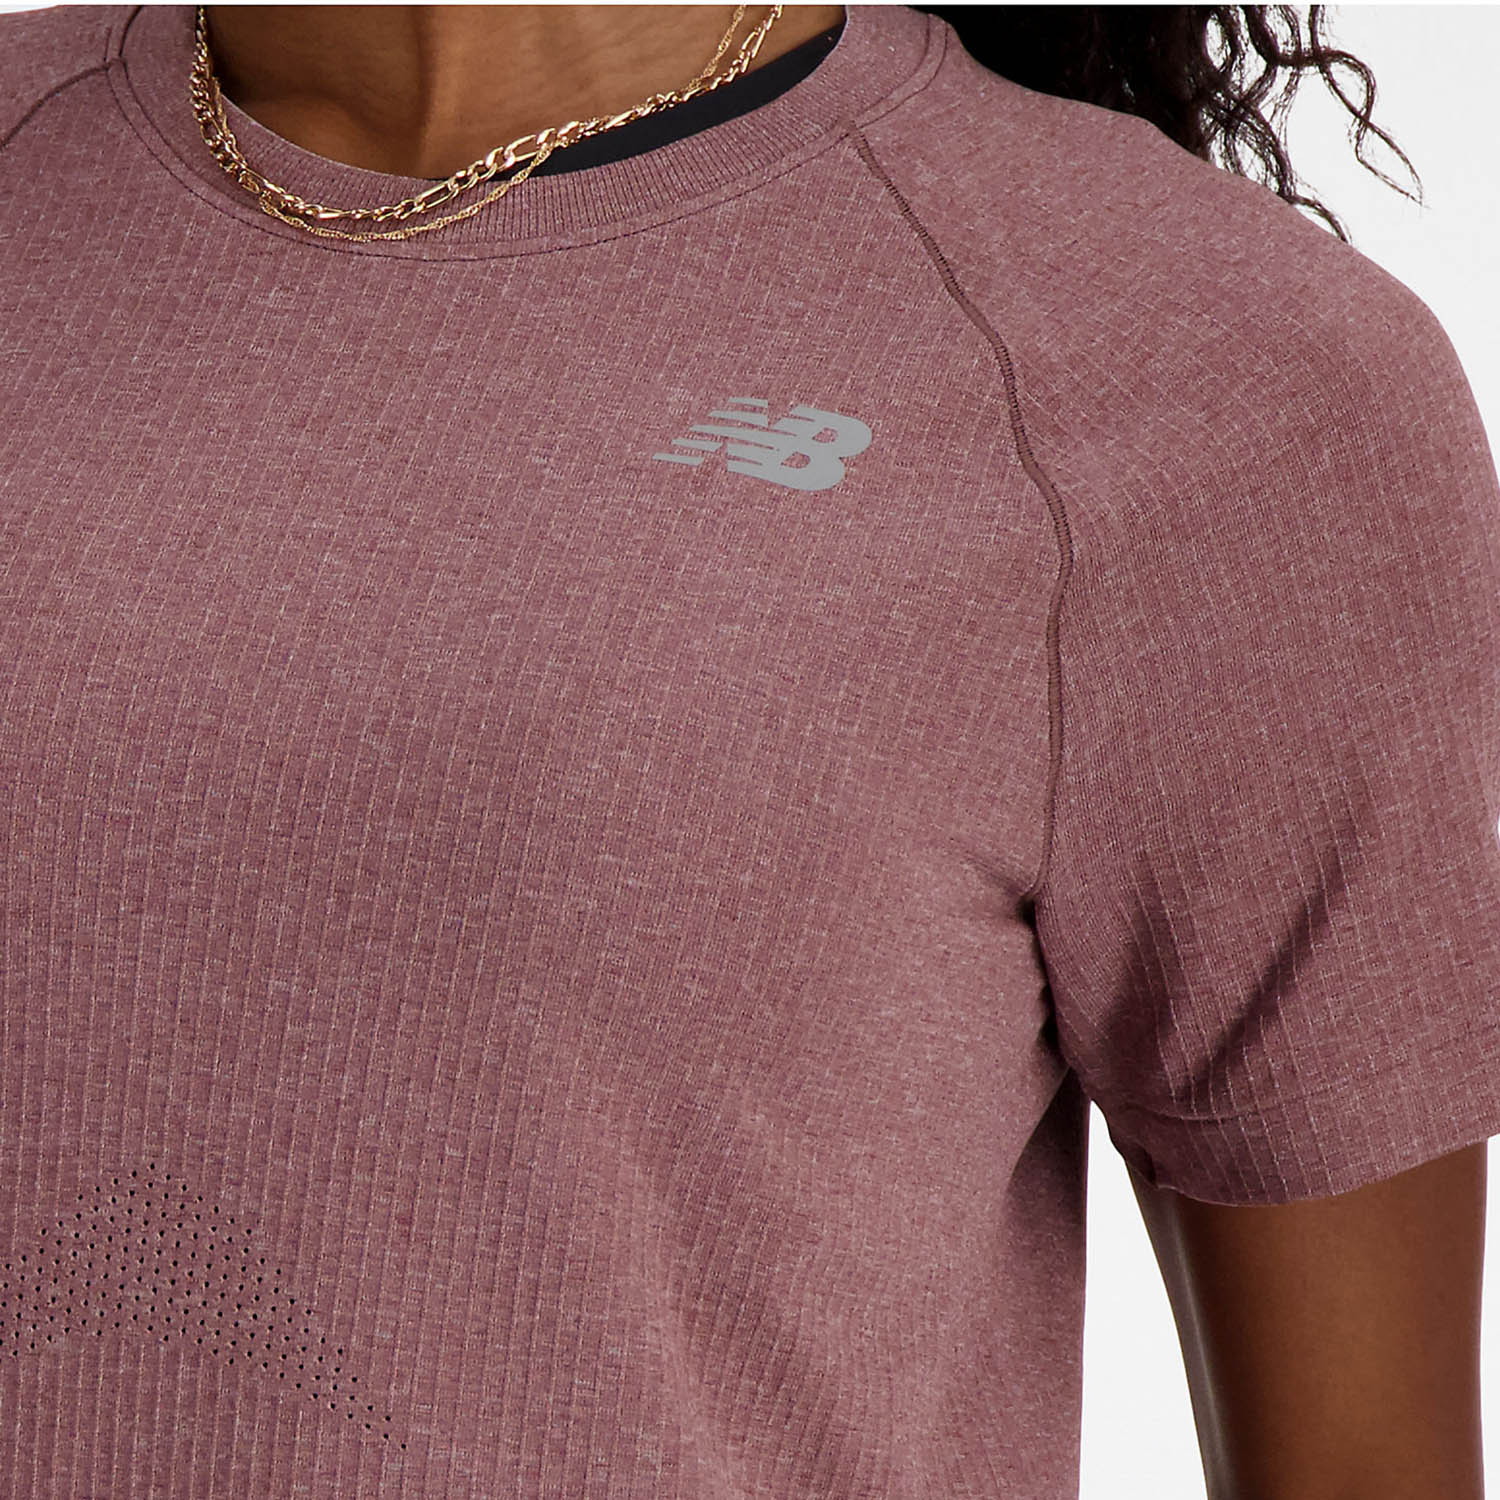 New Balance Speciality T-Shirt - Licorice Heather